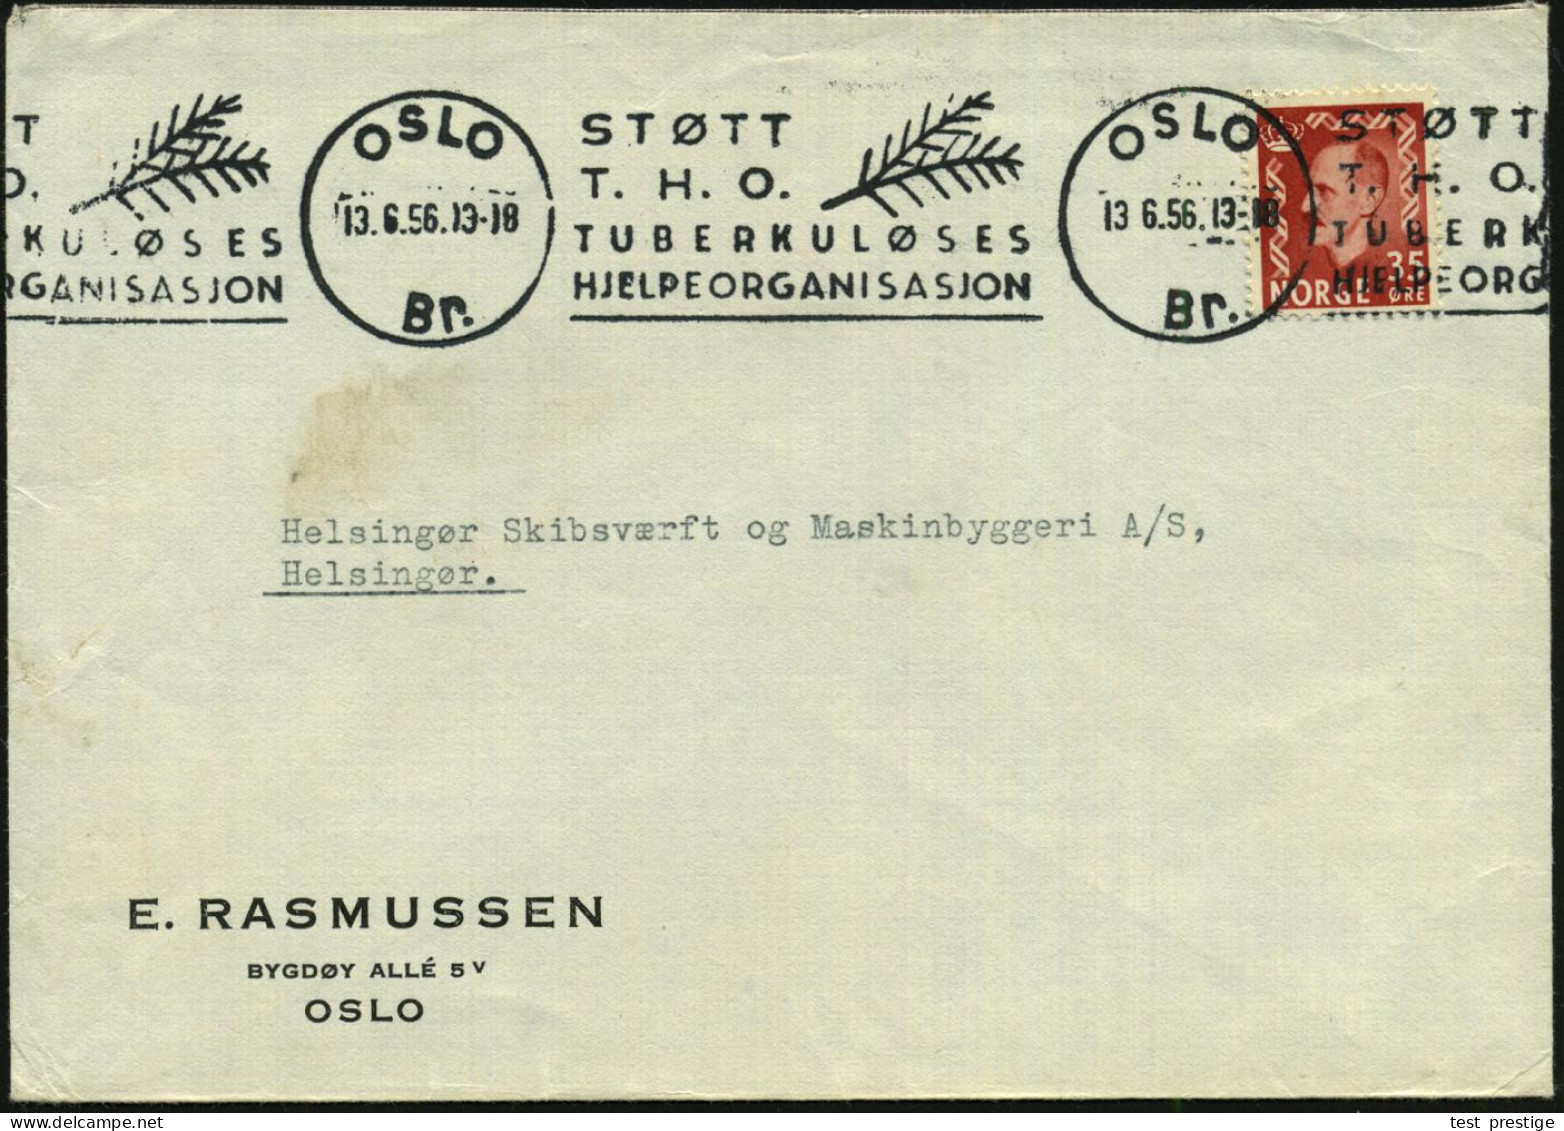 NORWEGEN 1956 (Juni) Band-MWSt: OSLO/Br./STÖTT/T.H.O./TUBERKULÖSES/HJELPEORGANISASJON (Zweig) Klar Gest. Bedarfsbf. - TU - Disease